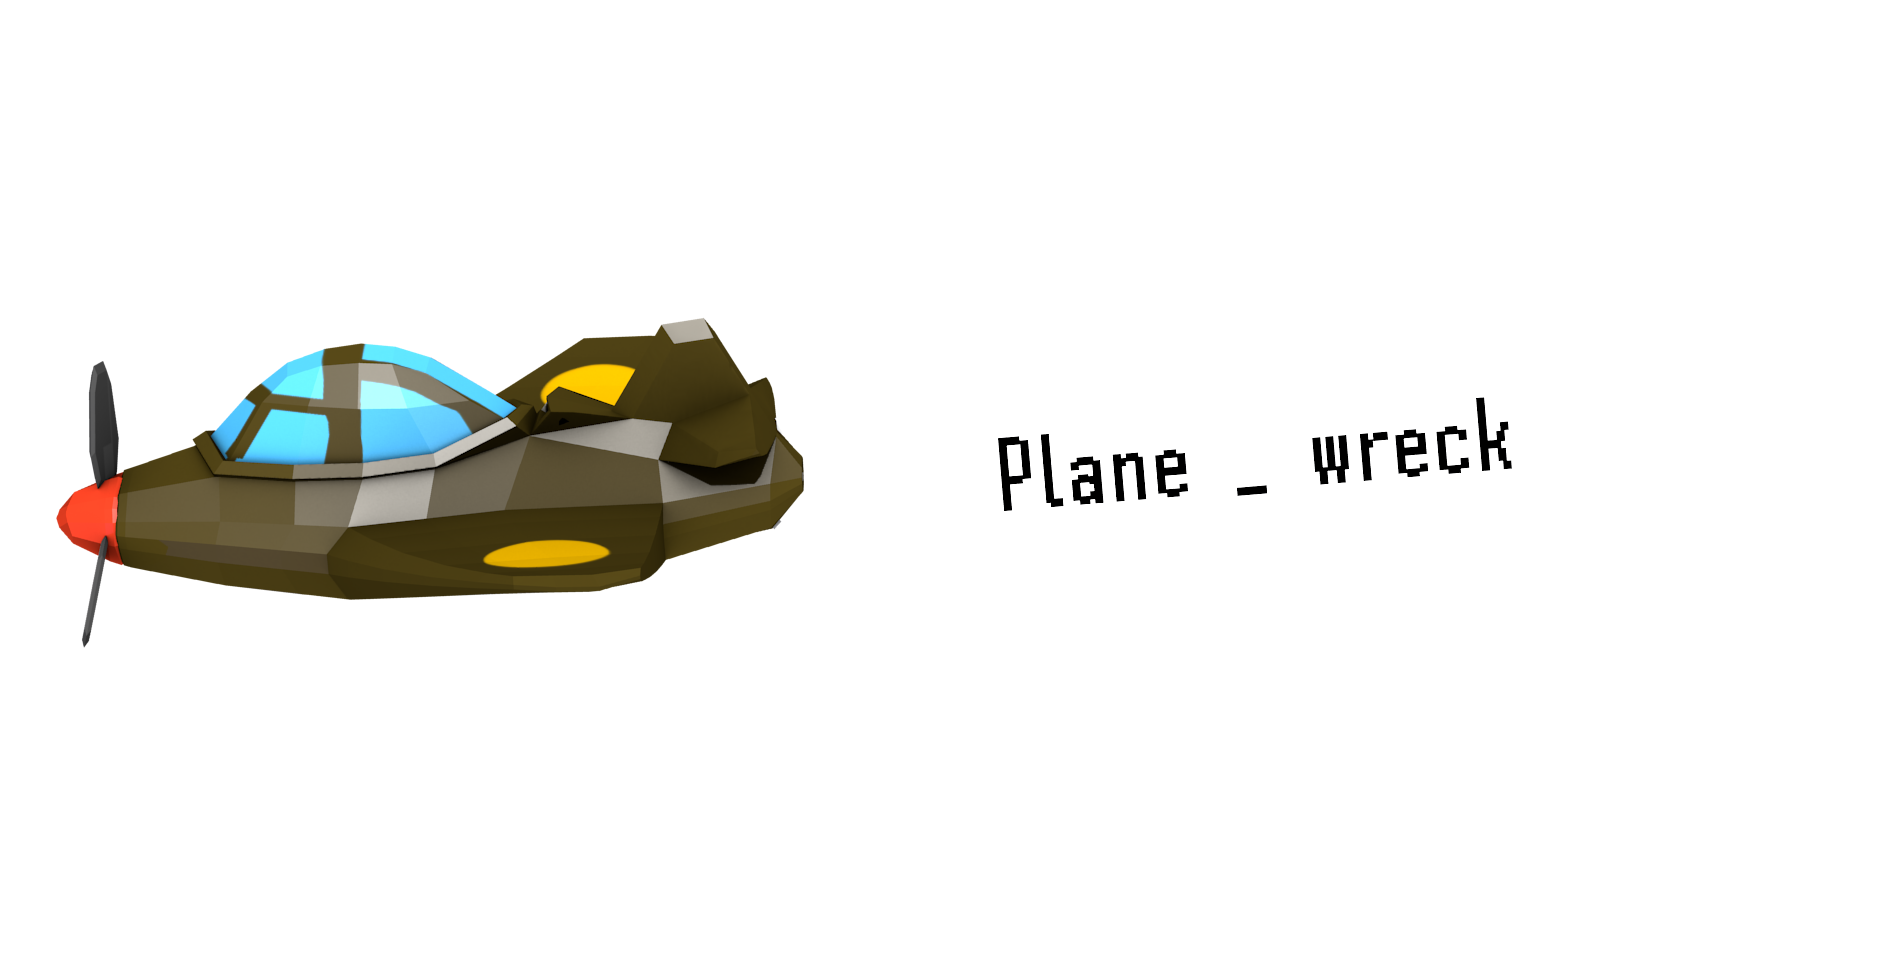 Plane wreck!!!